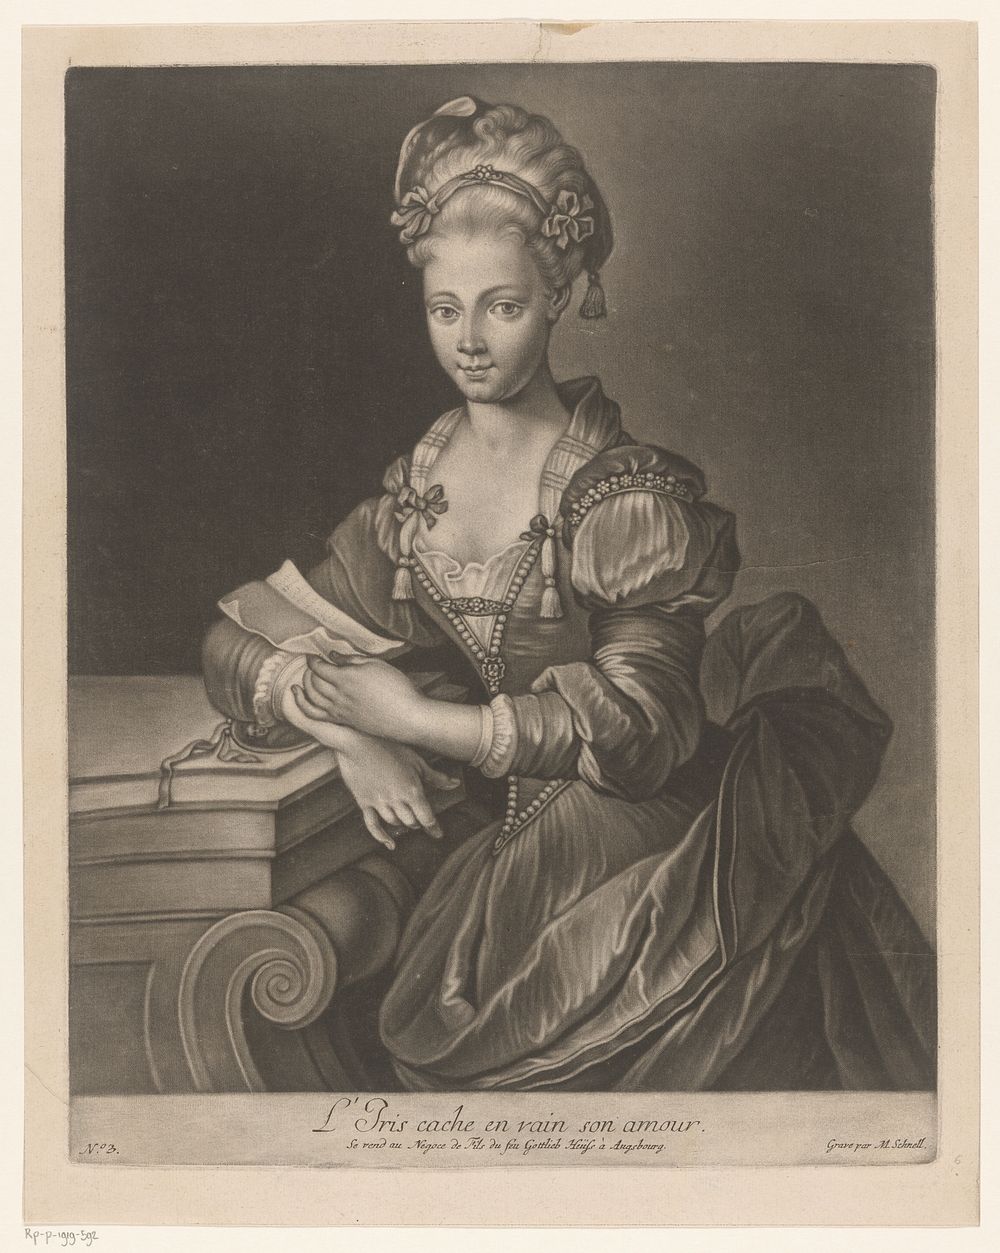 Brieflezende jonge vrouw (1731 - 1740) by Michael Schnell and Gottlieb Heiss I